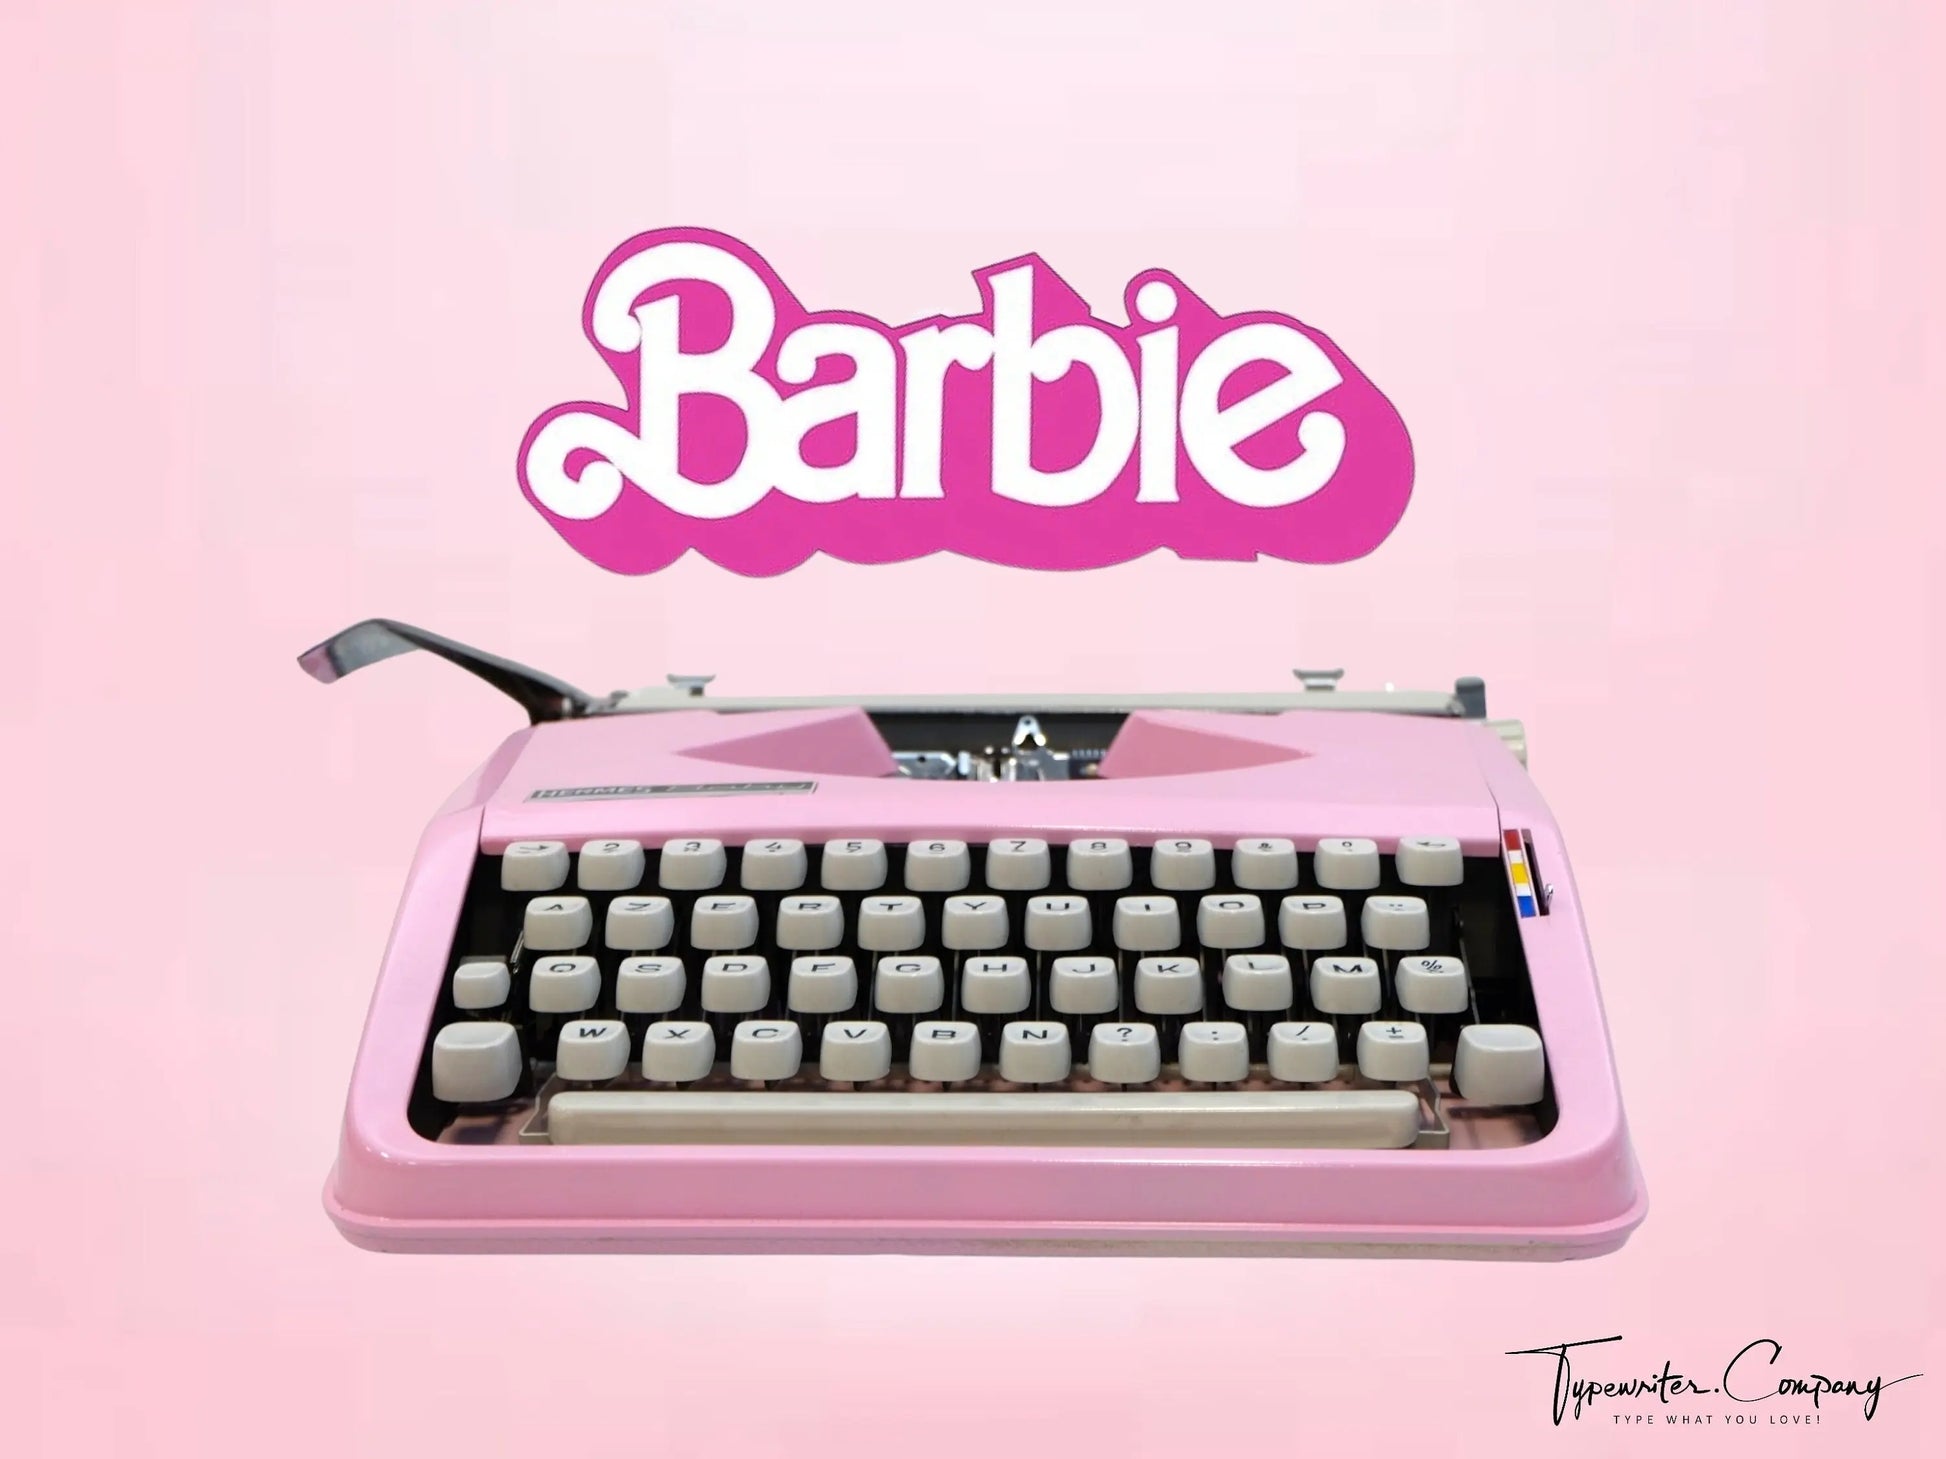 CURSIVE Barbie Pink Hermes Baby Manual Vintage Typewriter, Serviced - ElGranero Typewriter.Company